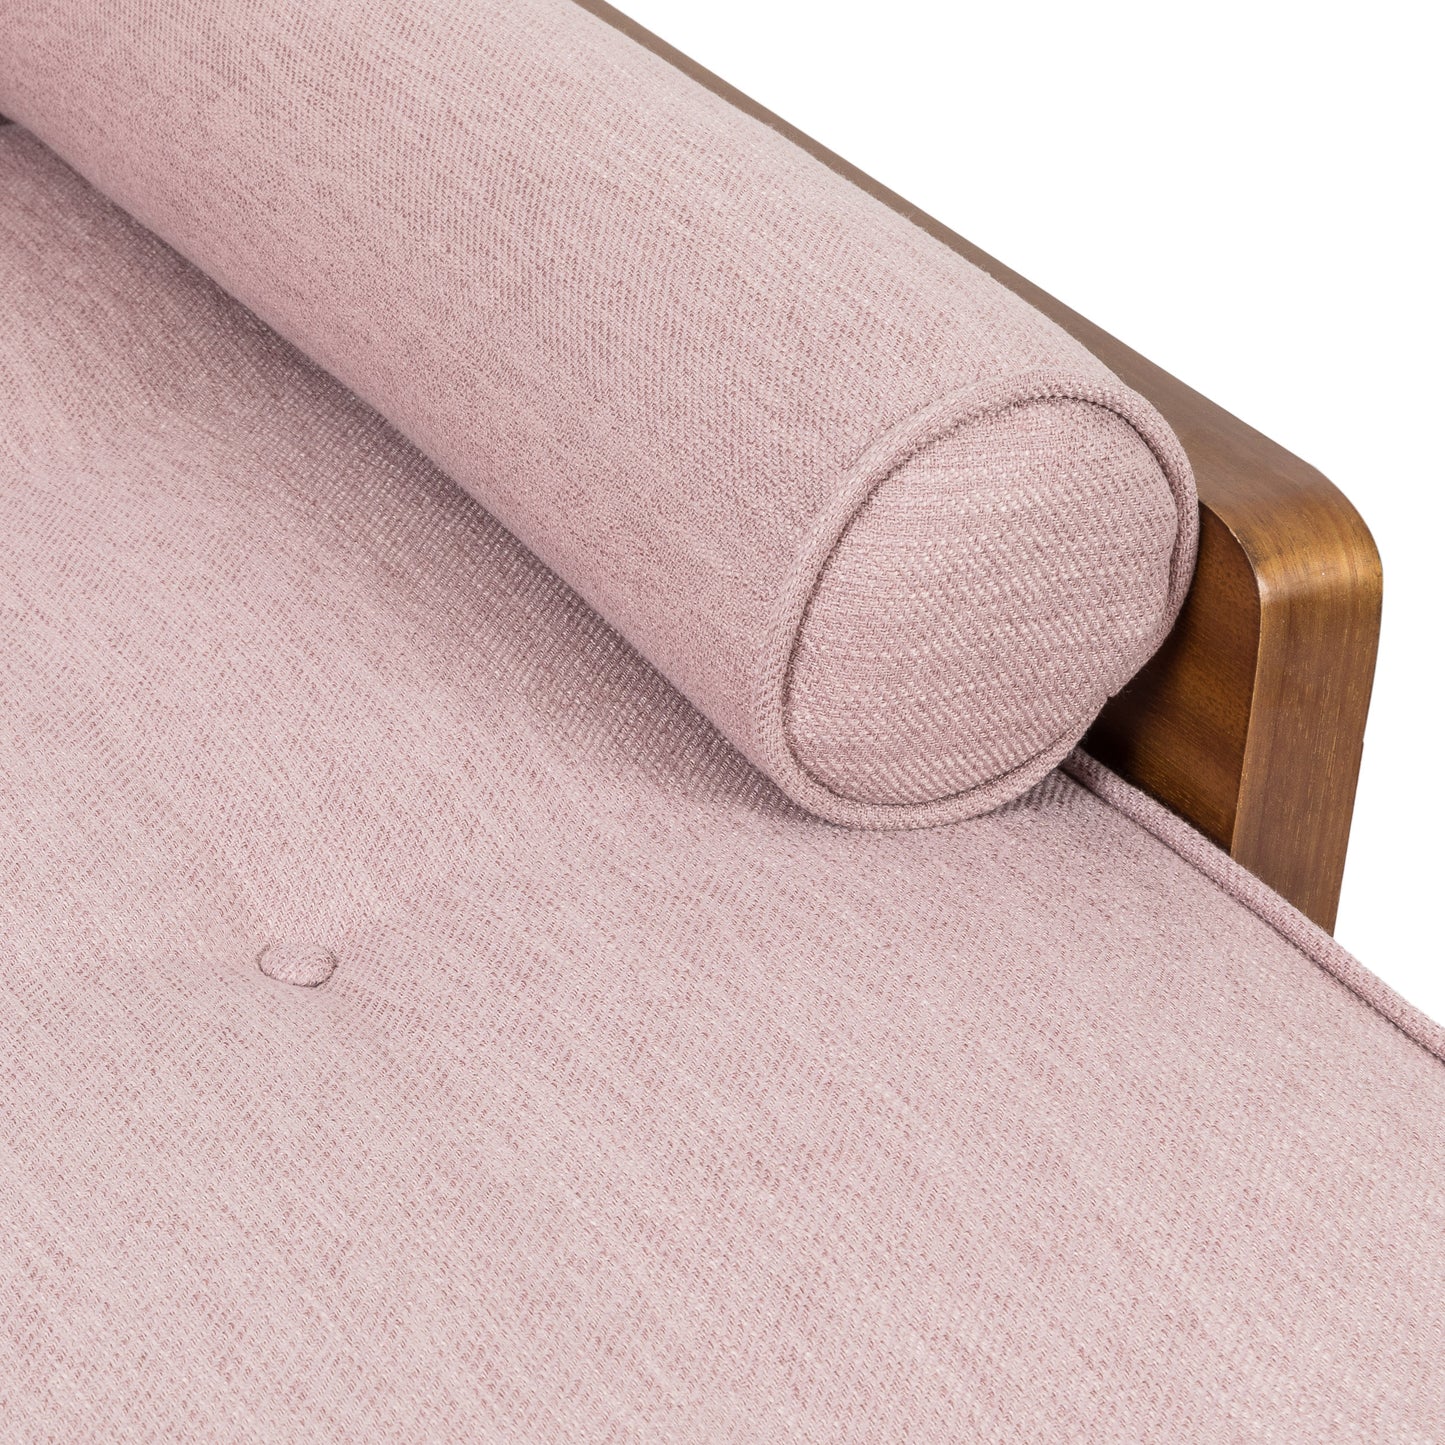 Yaretsi Mid-Century Modern Fabric Chaise Sectional